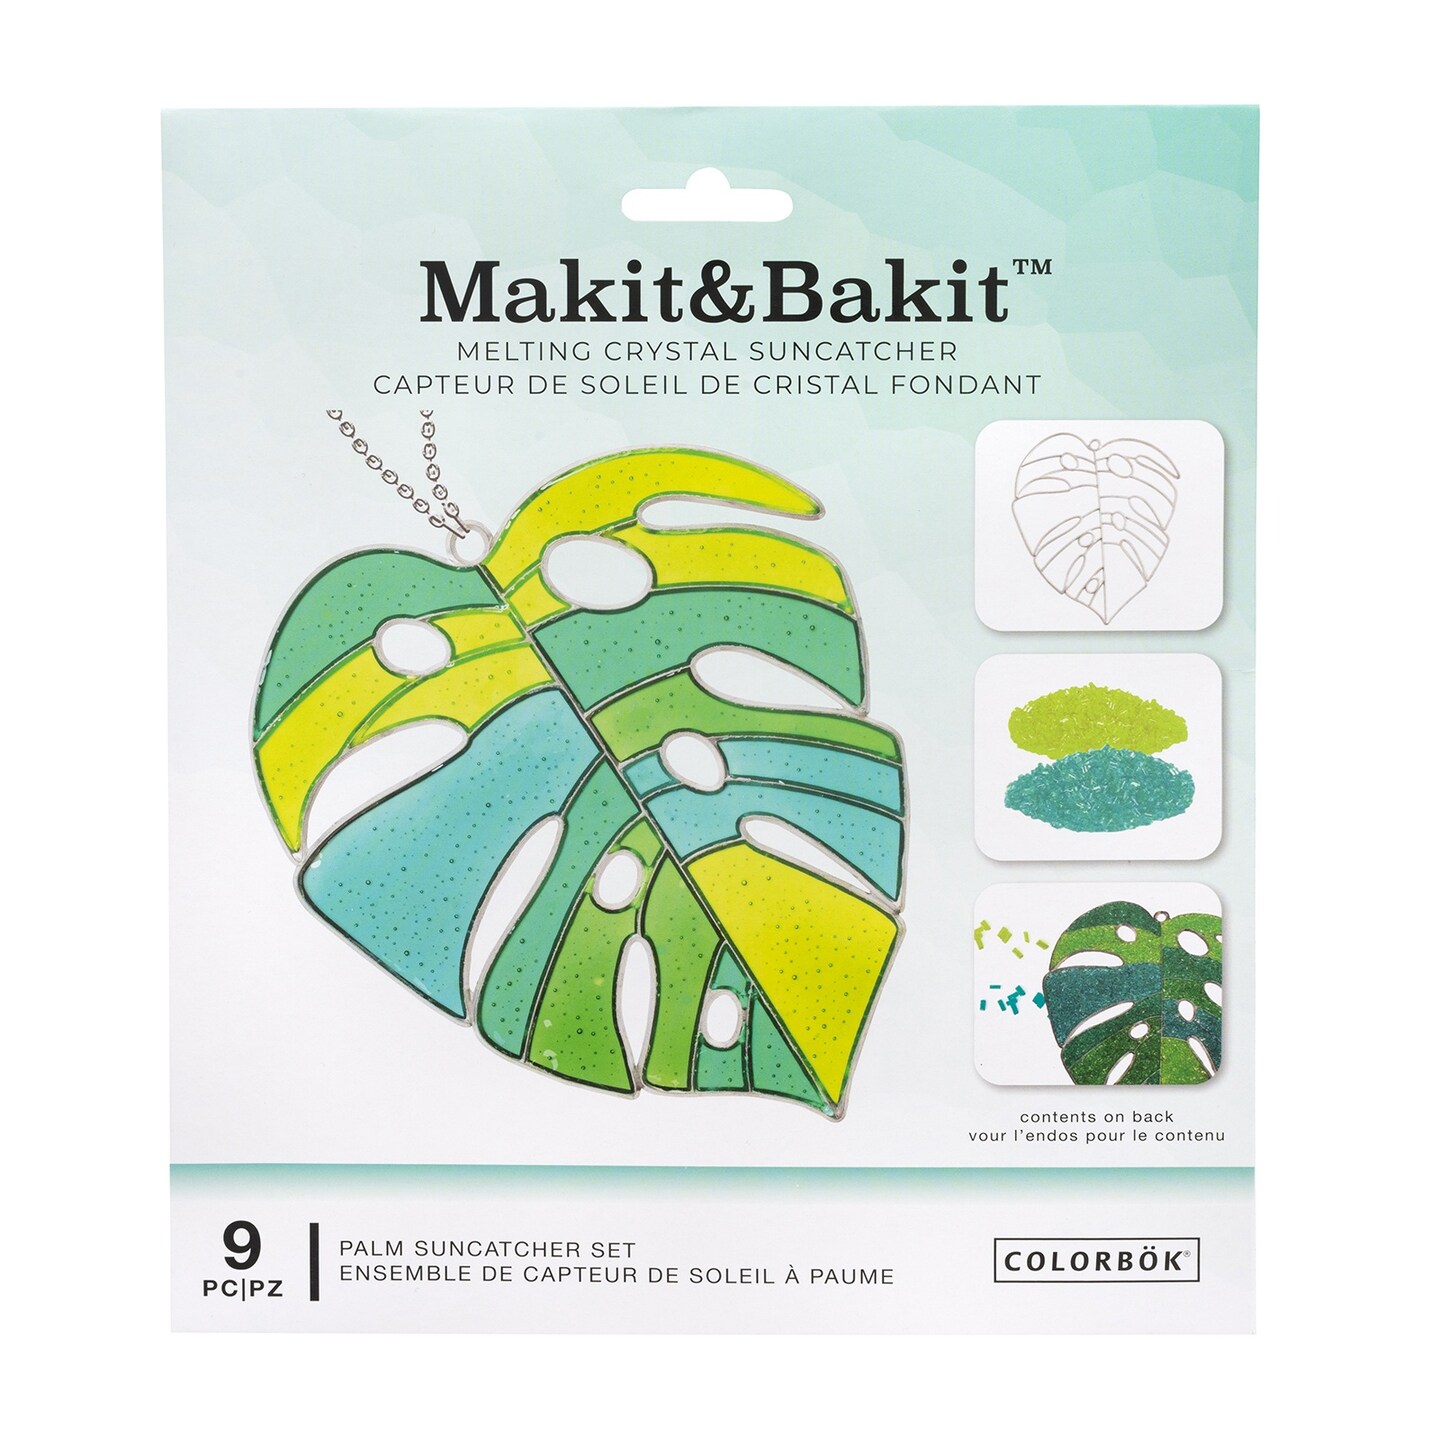  Colorbok Makit & Bakit Suncatcher Kit Stained Glass